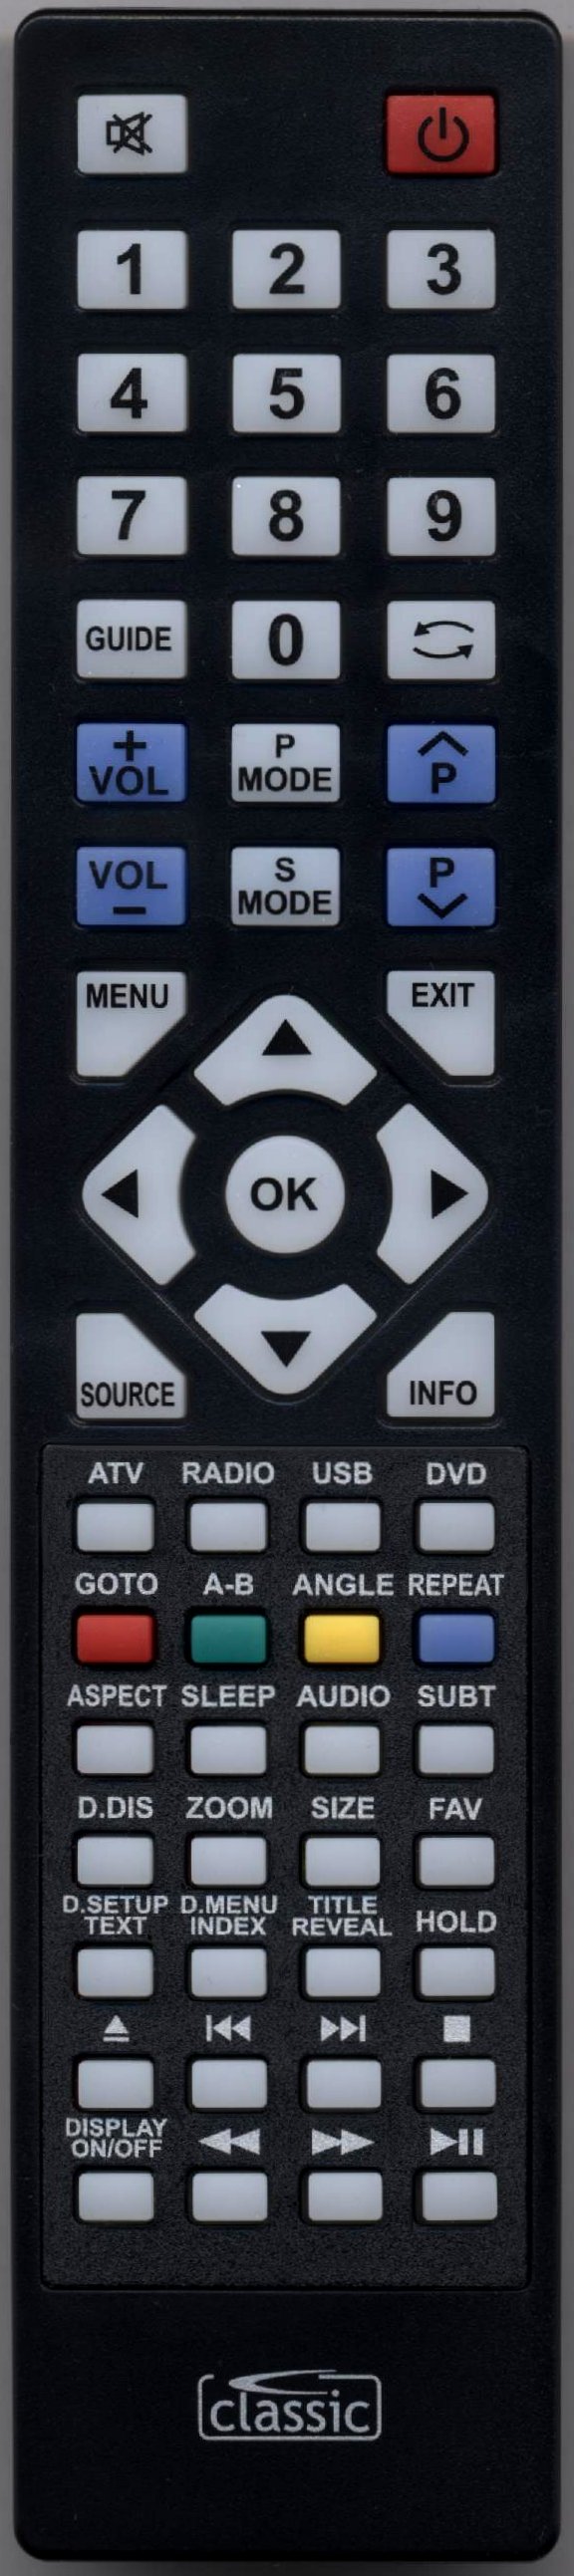 UMC X185/28G-GB-TCDU-UK Remote Control Alternative